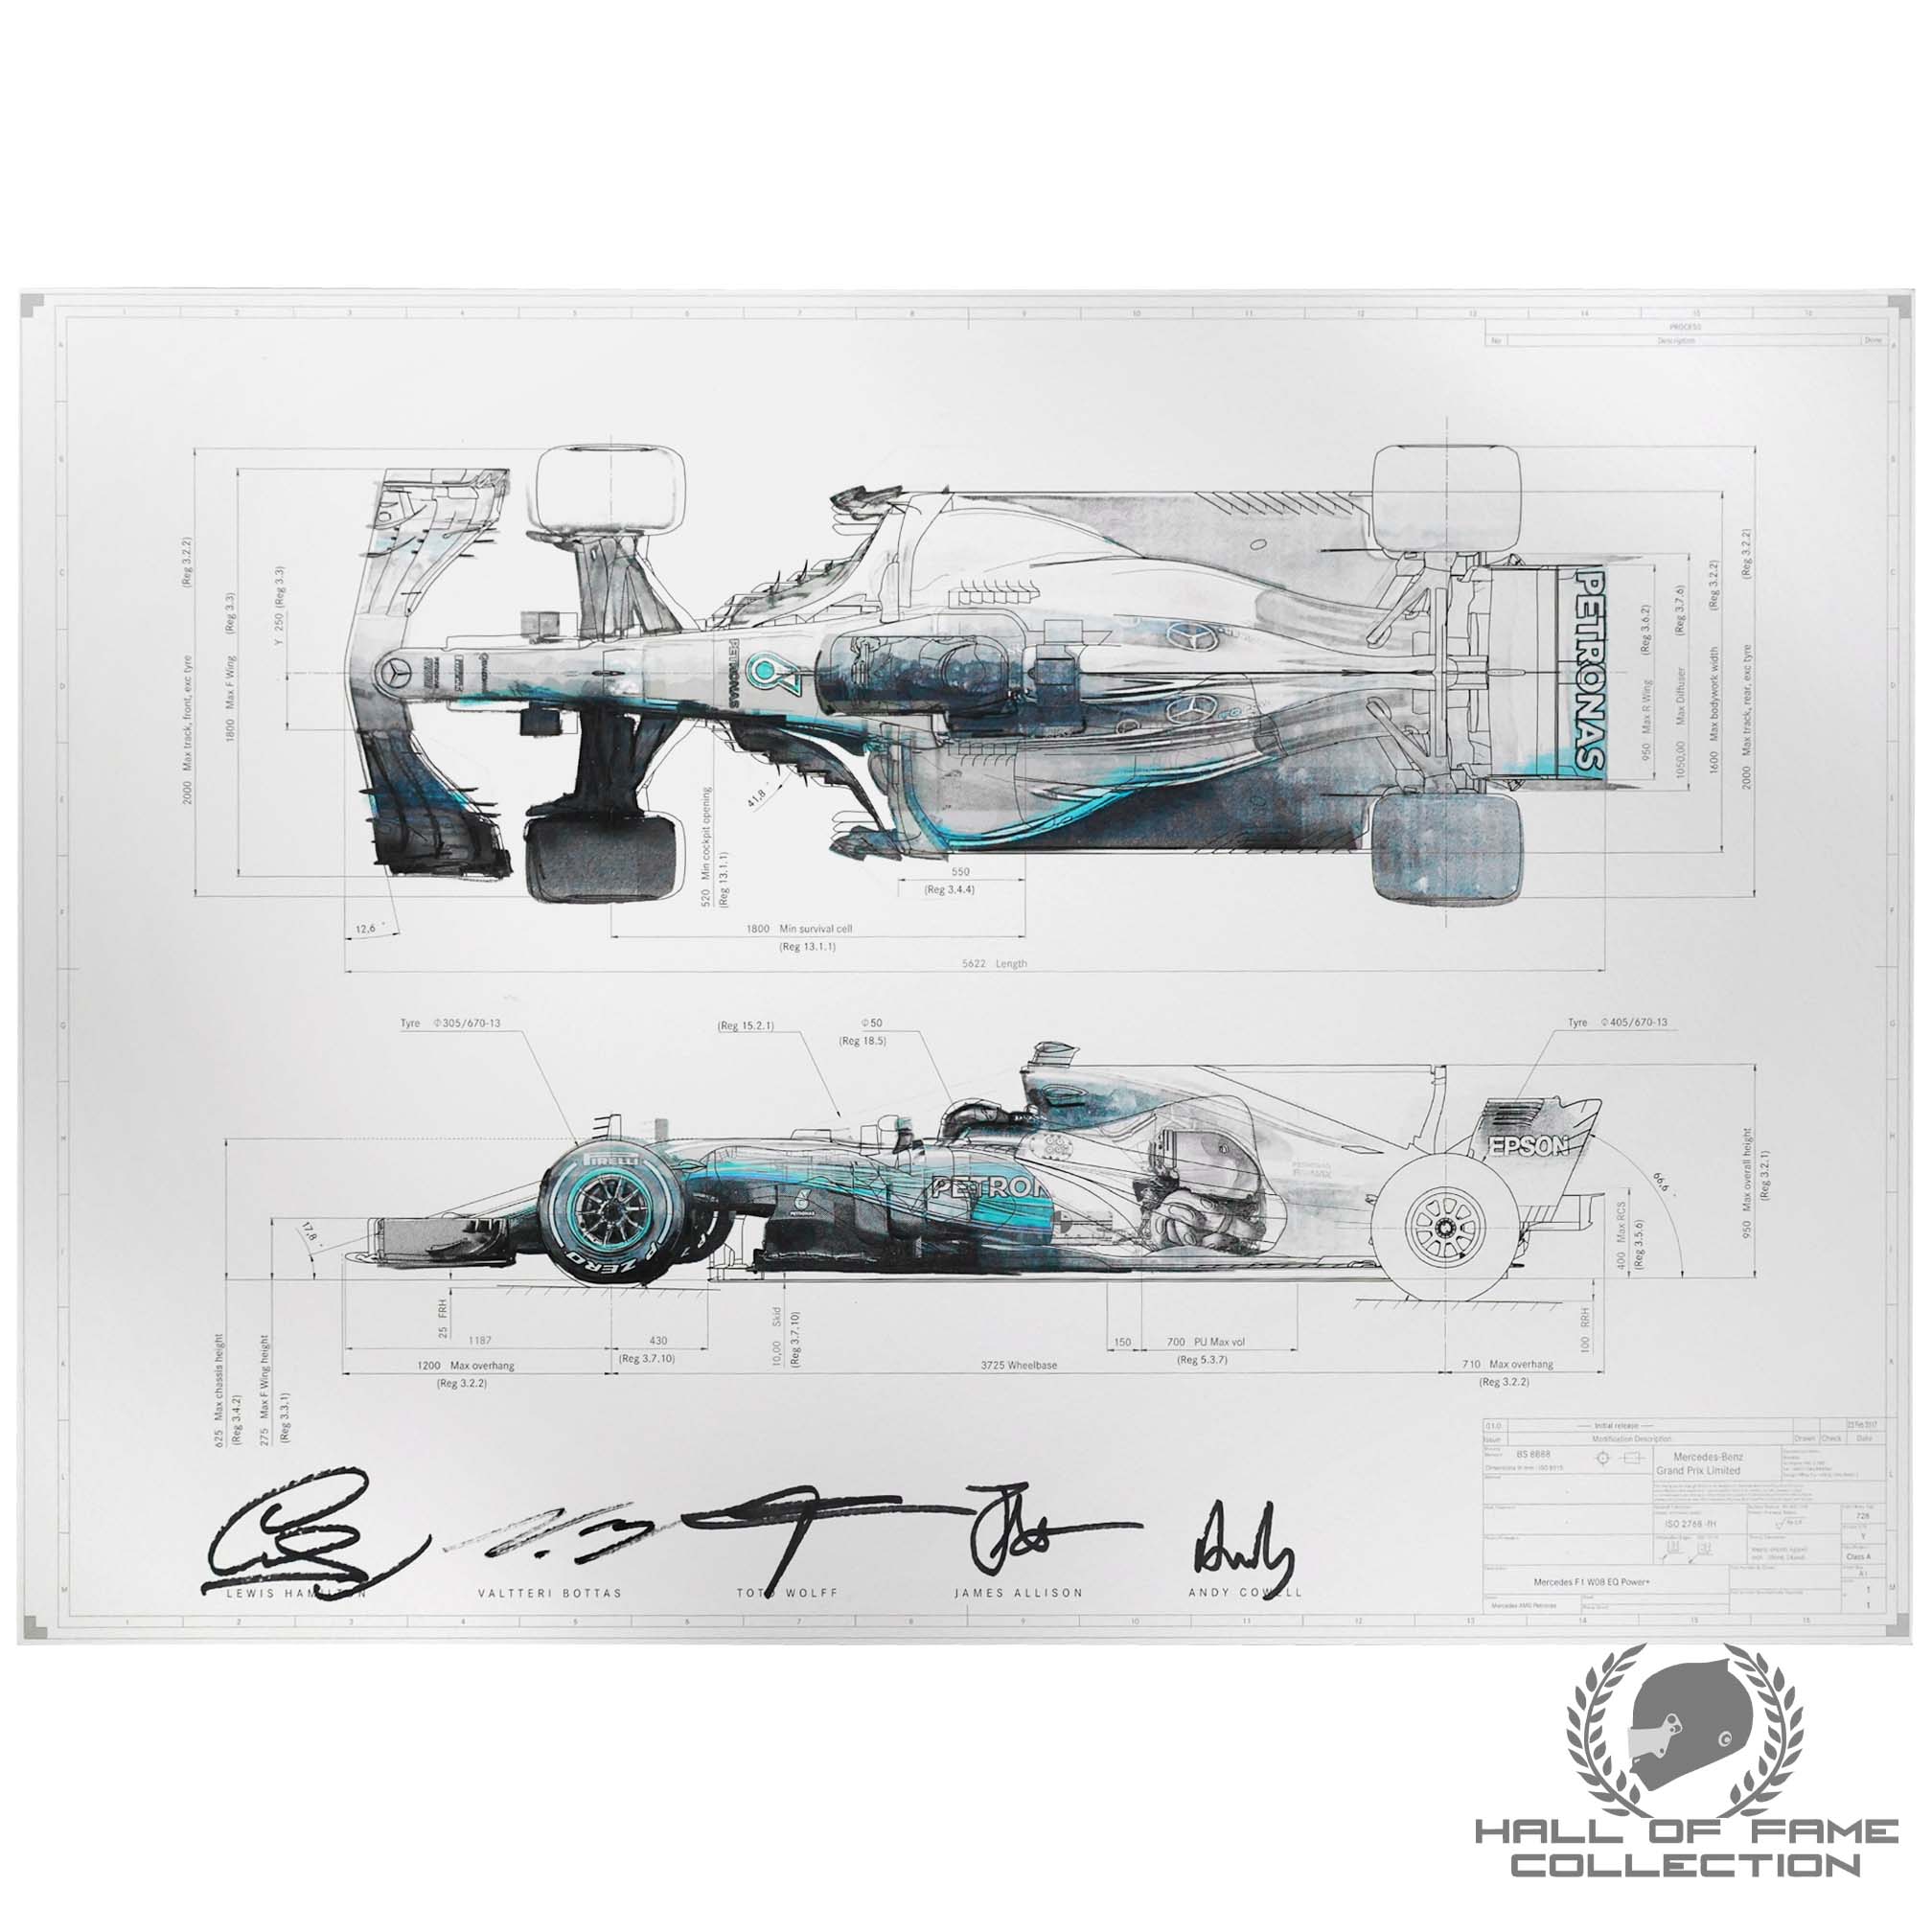 2017 Lewis Hamilton Valtteri Bottas Toto Wolff James Allison Andy Cowell Signed Mercedes W08 F1 Print